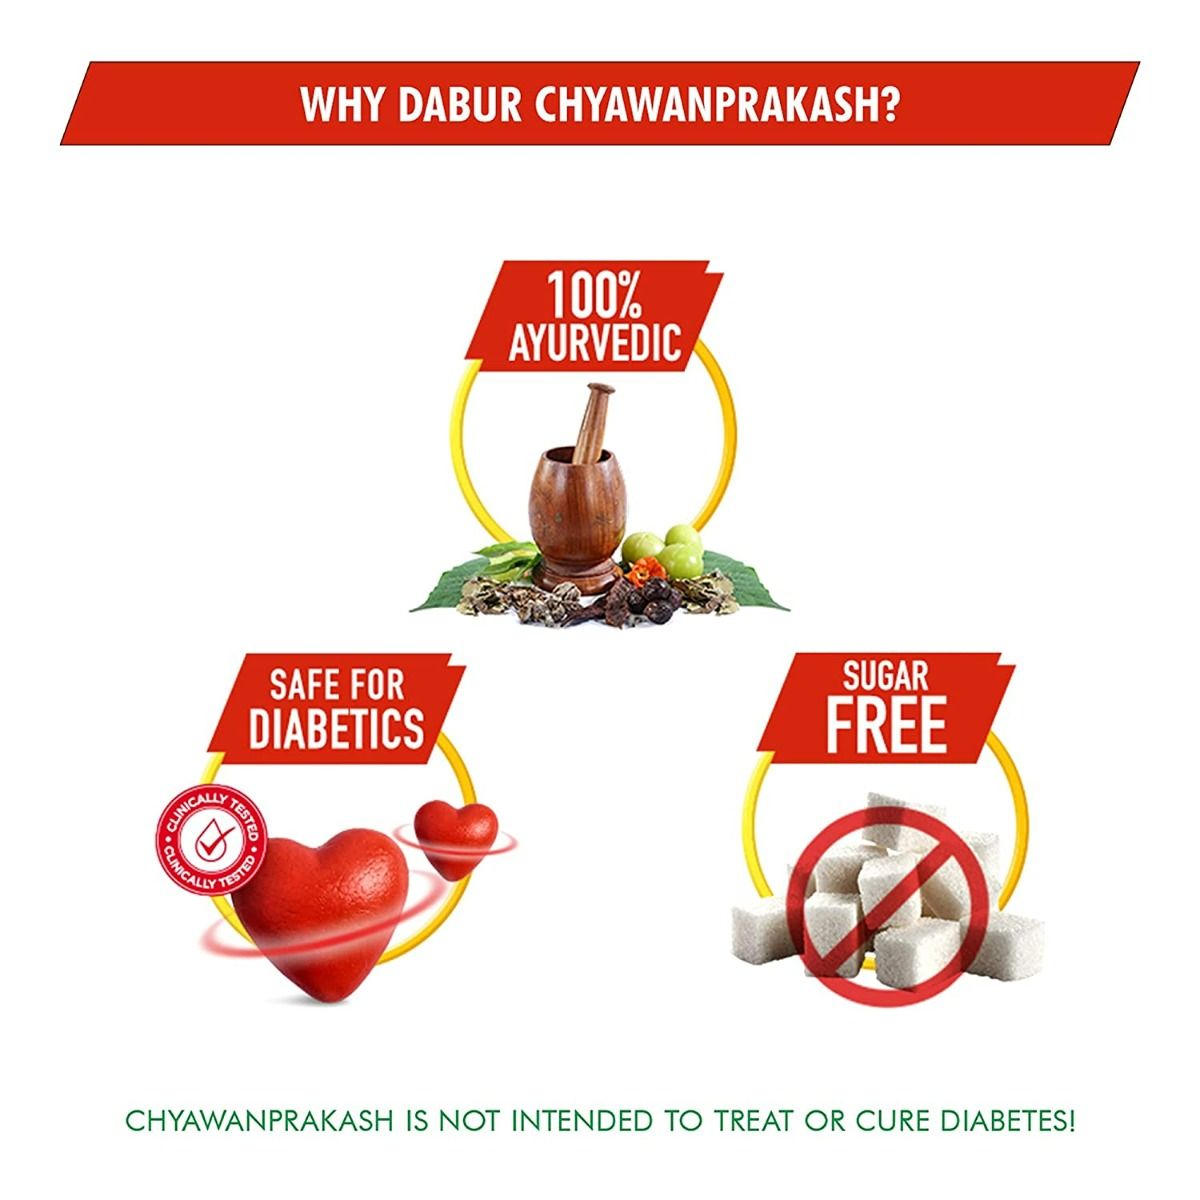 Dabur Chyawanprakash Sugar Free, 500 gm, Pack of 1 